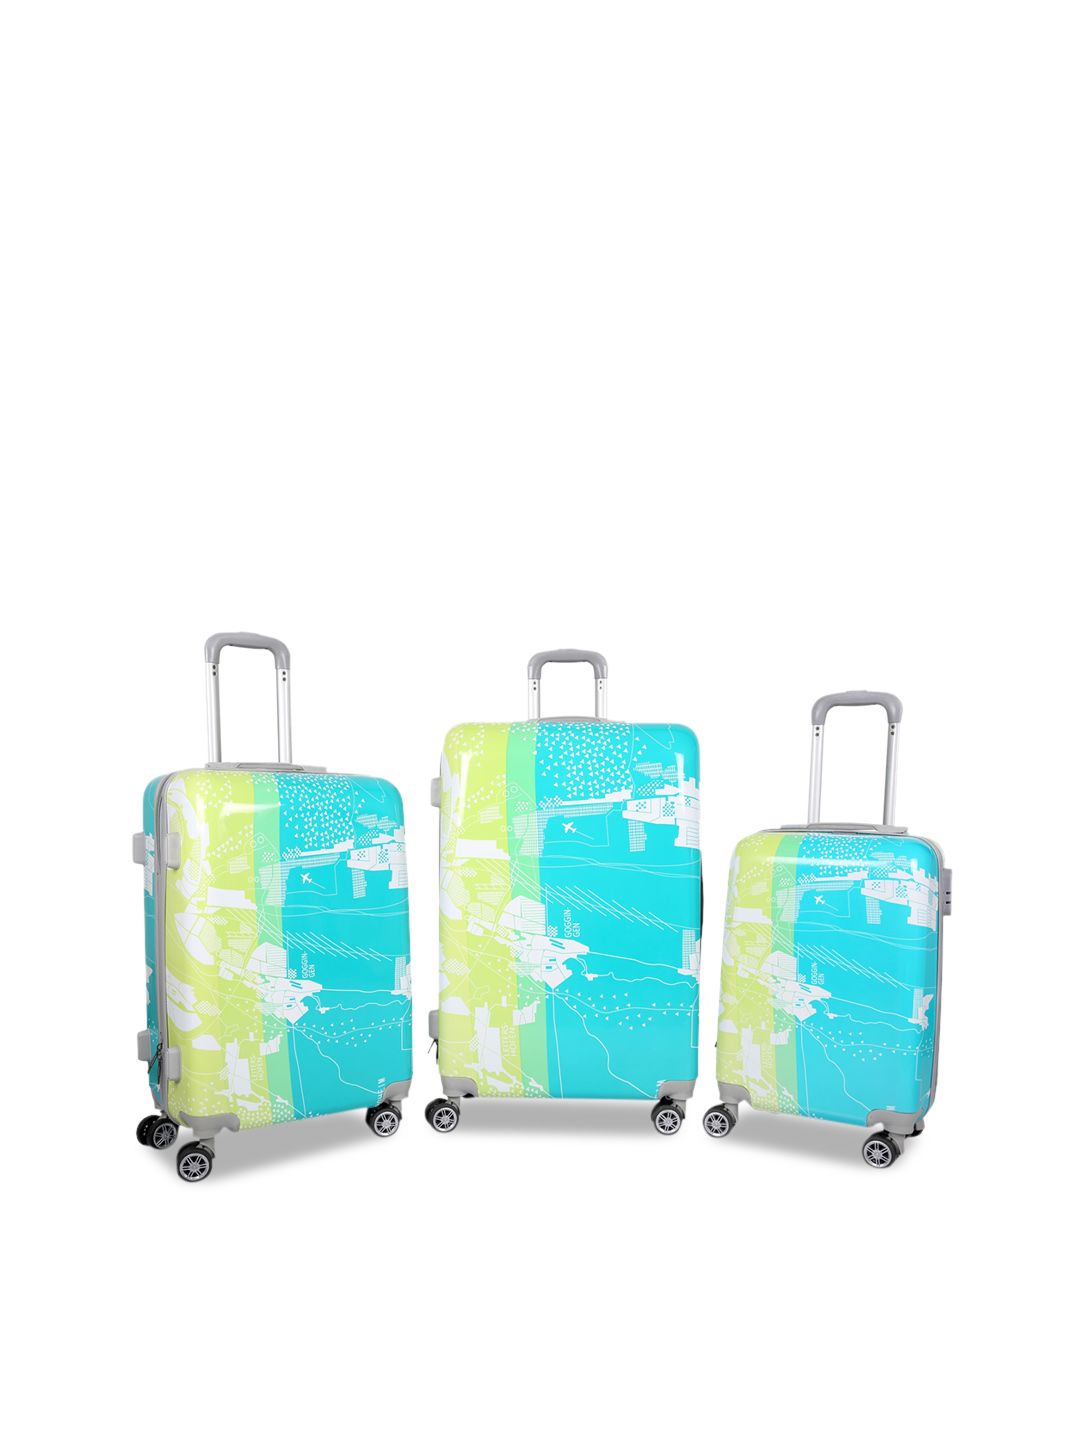 Polo Class Green 3 Pc Set Hard Luggage Trolley Bag Price in India